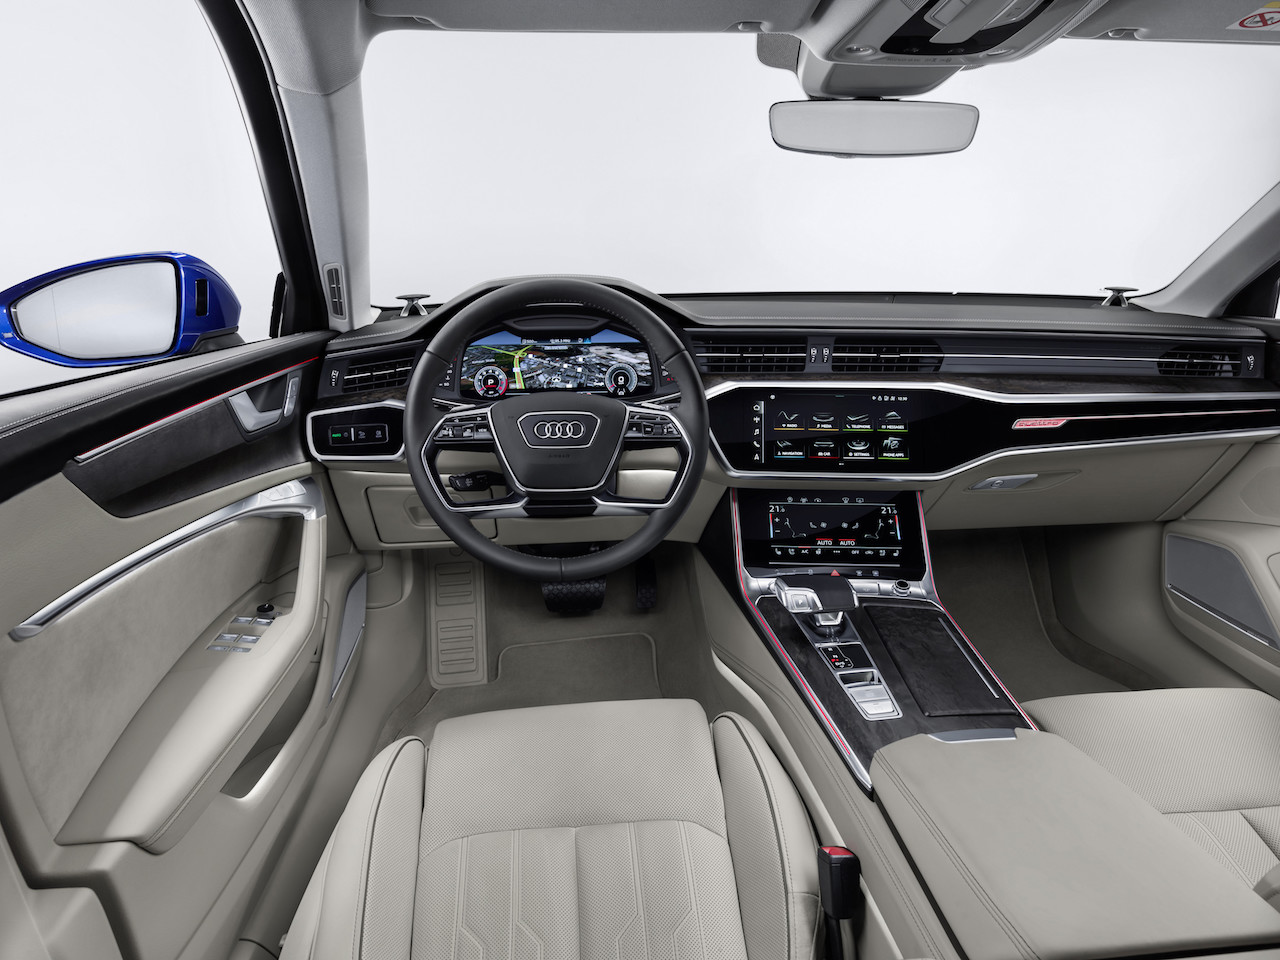 2018 Audi A6 Avant interior dashboard